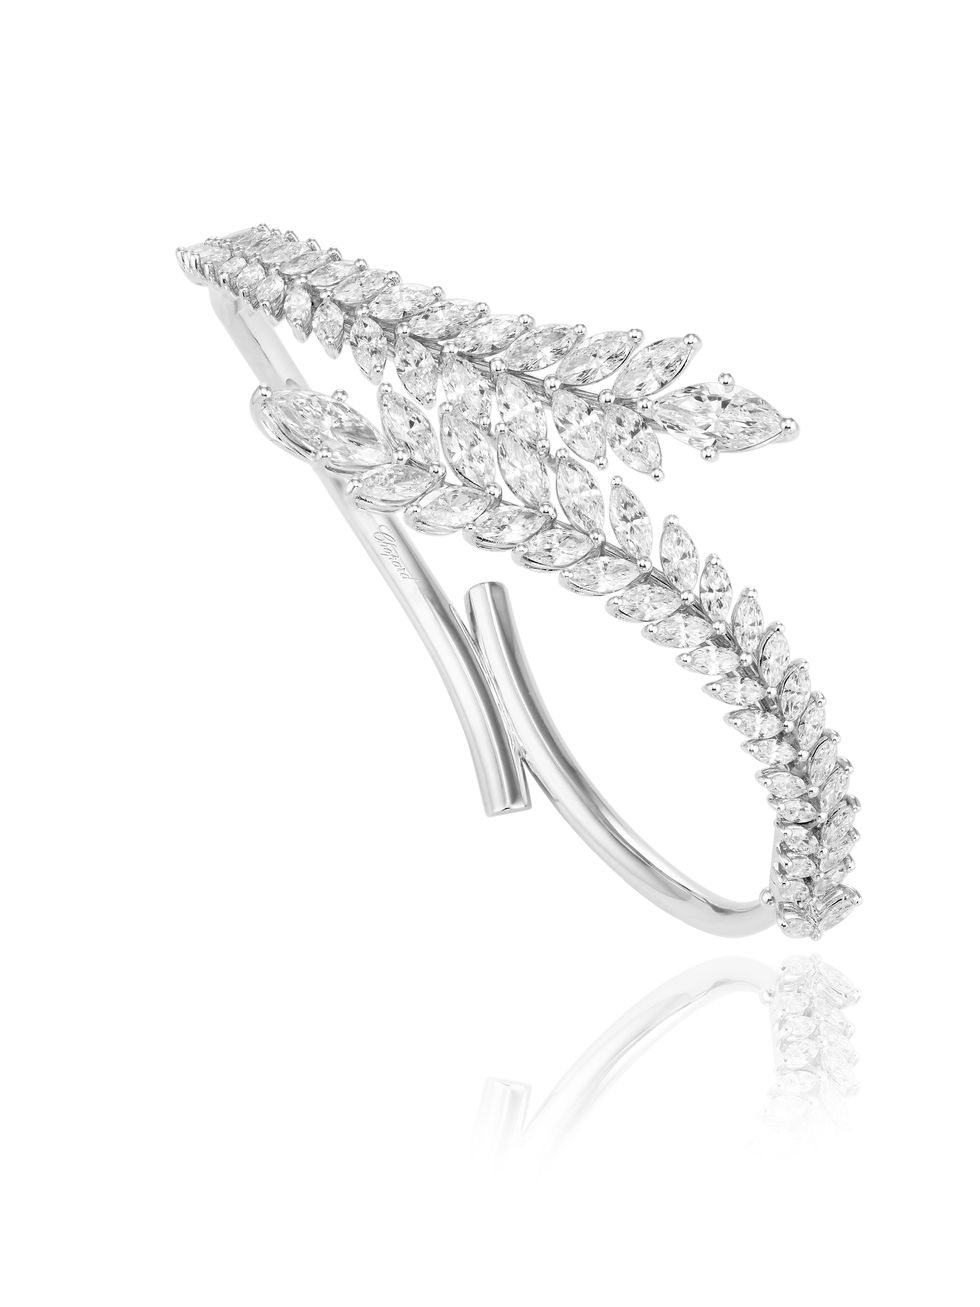 Jewellery, Diamond, Ring, Fashion accessory, Engagement ring, Platinum, Pre-engagement ring, Body jewelry, Silver, Metal, 